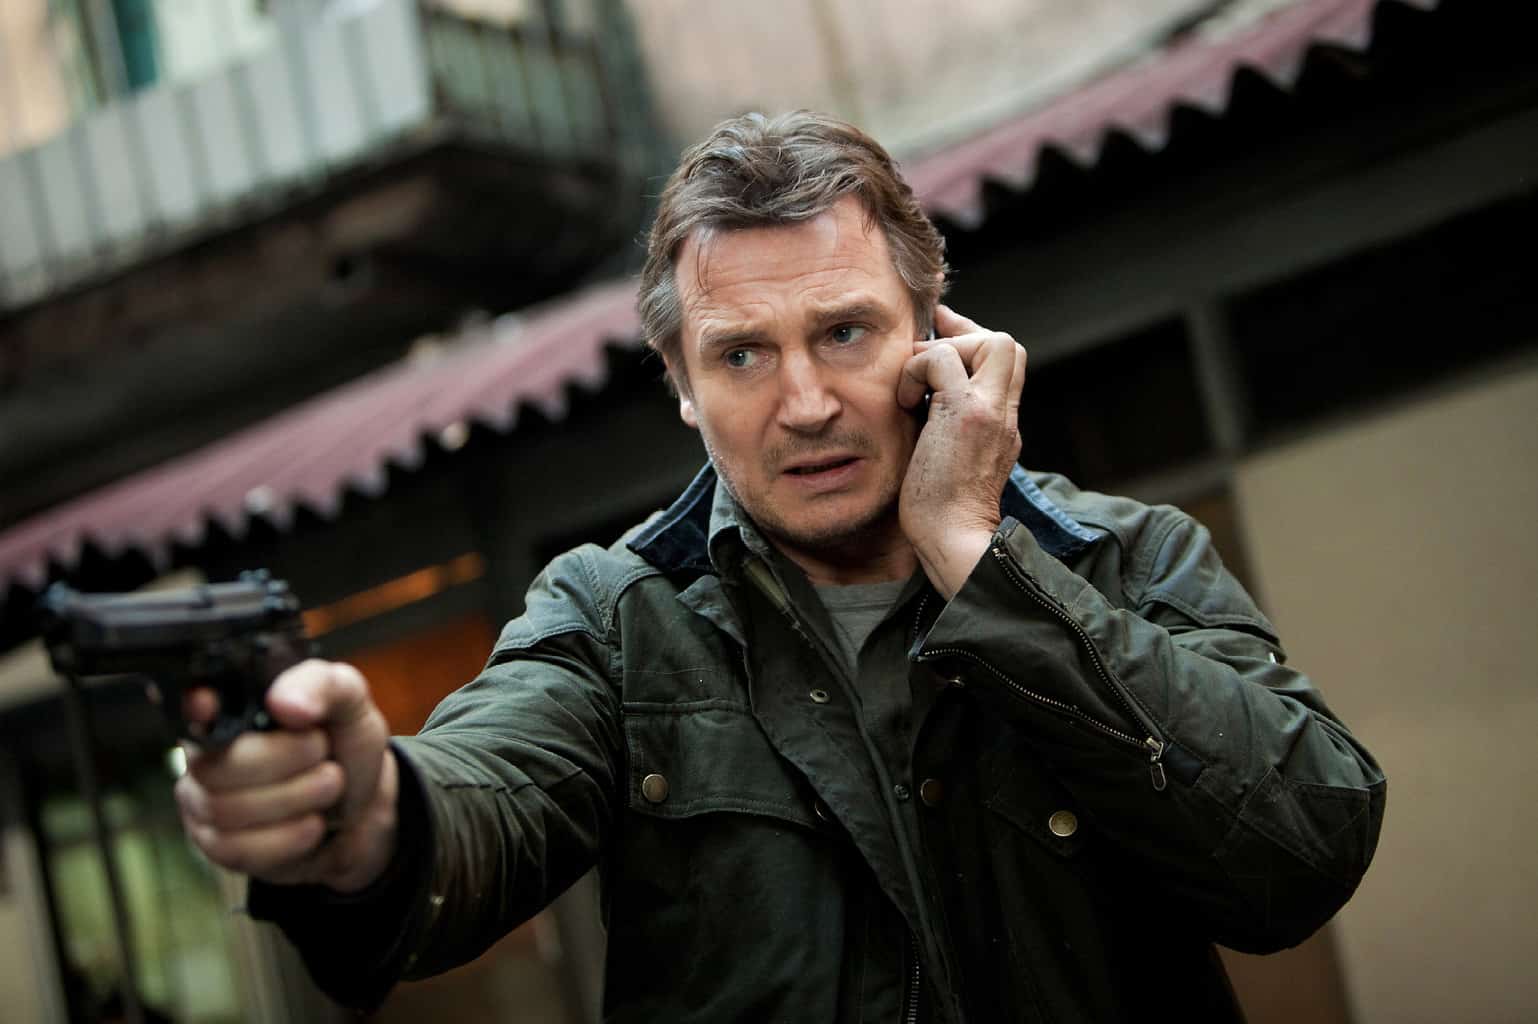 Liam Neeson's top five roles: 5. Qui-Gon Jinn --- Star Wars Episode 1 ---  The Phantom Menace 4. Daniel --- Love Actually 3. Ra's al Ghul…